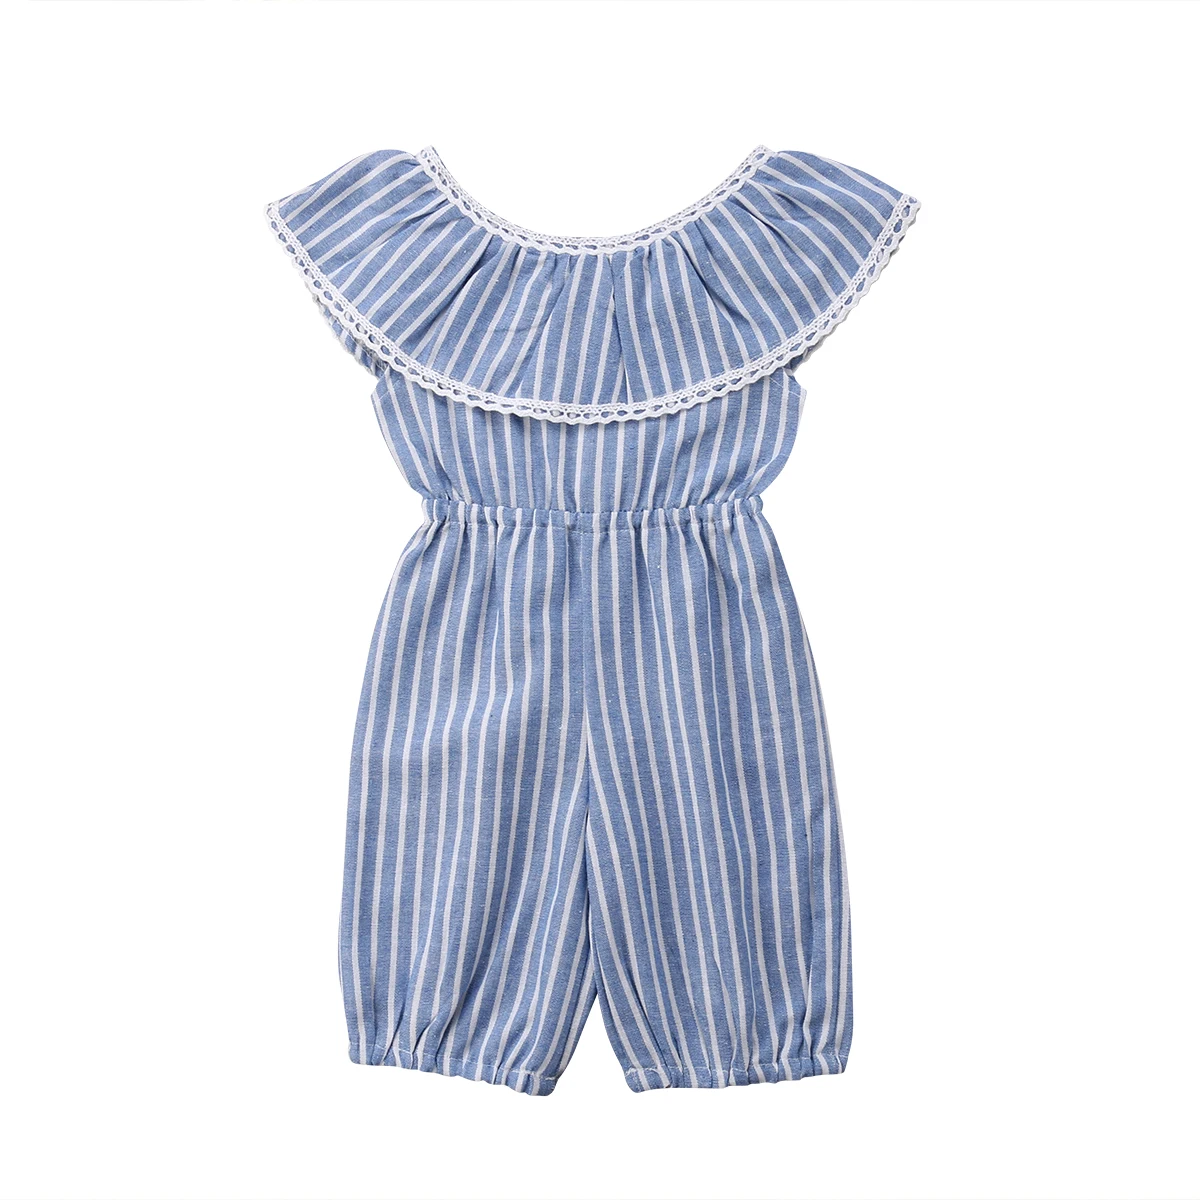 Newborn Kids Baby Girls Blue Striped Romper Summer Short Sleeve Infant ...